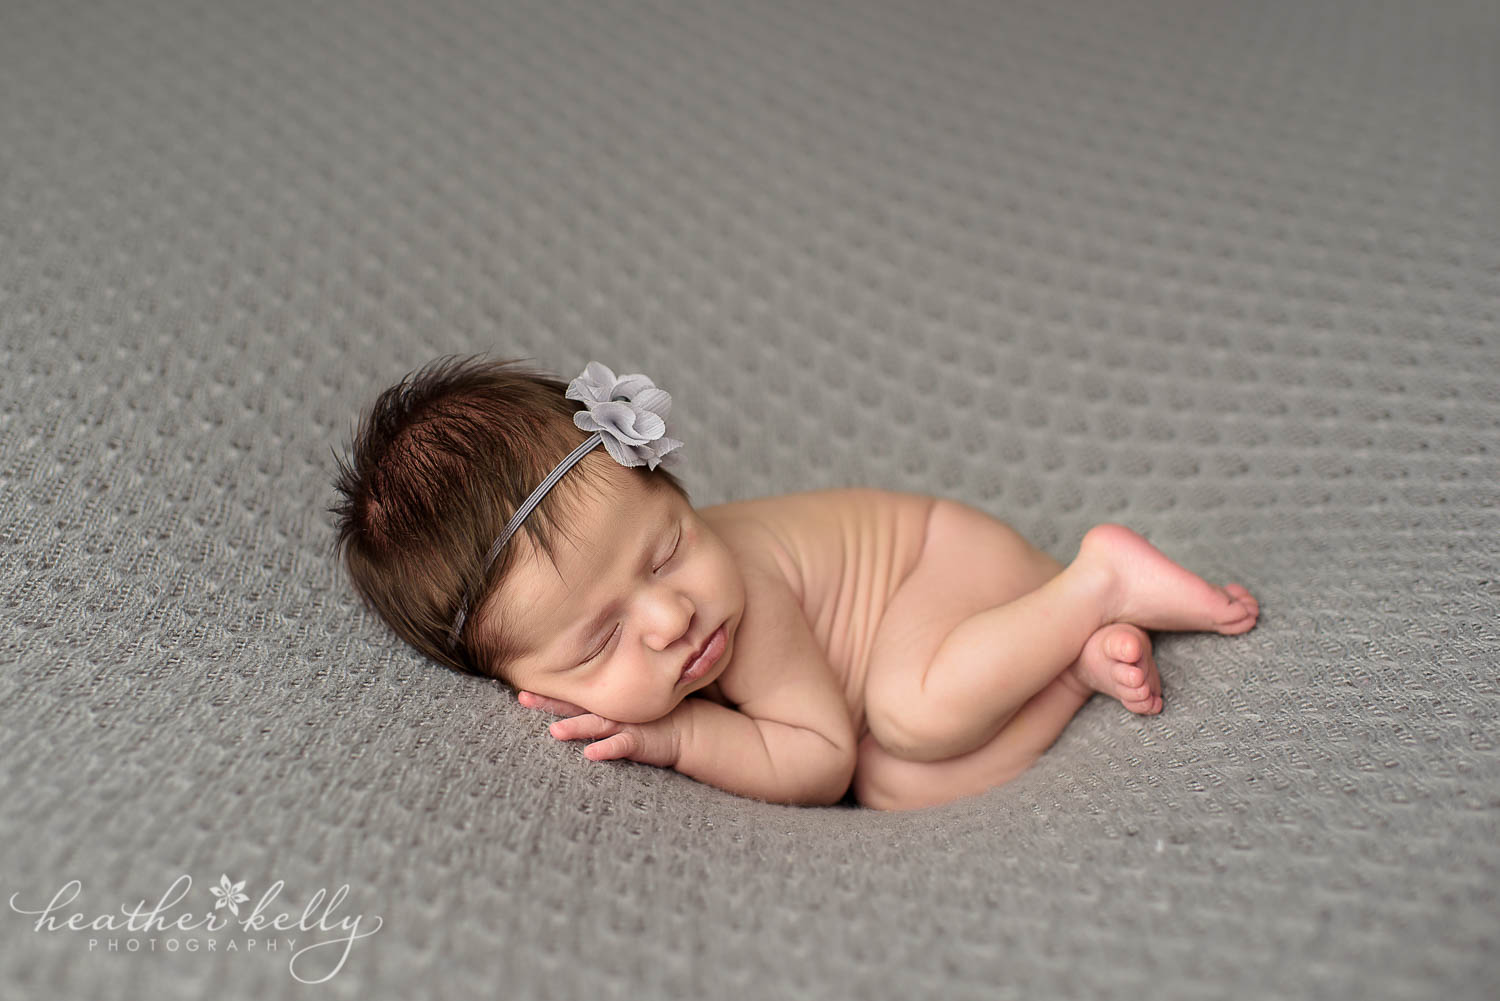 newborn photography poses baby girl gray